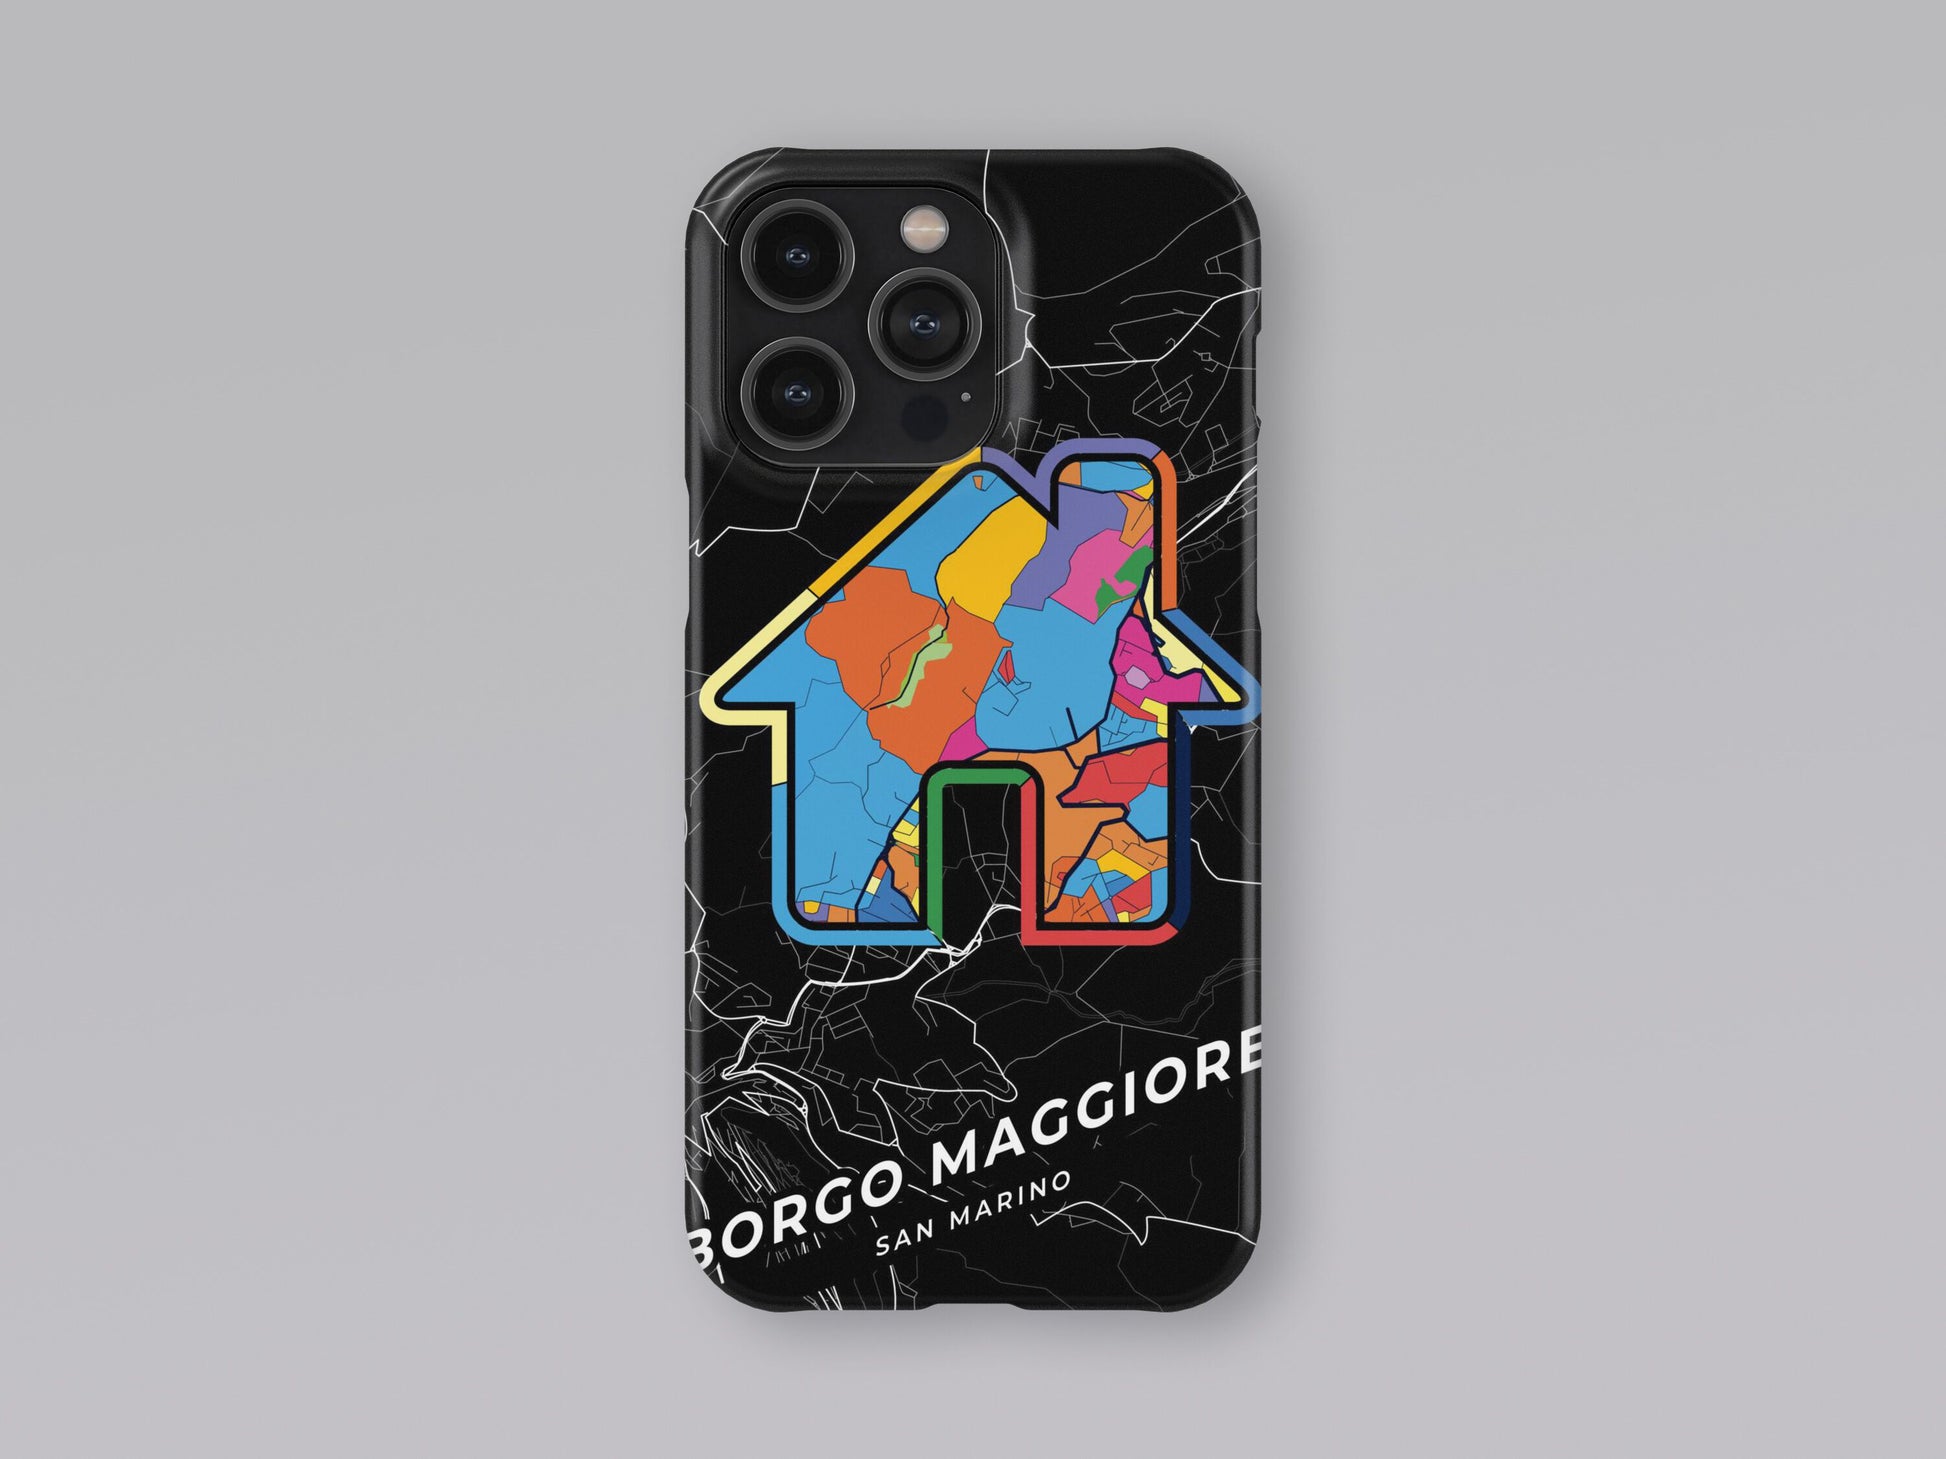 Borgo Maggiore San Marino slim phone case with colorful icon. Birthday, wedding or housewarming gift. Couple match cases. 3